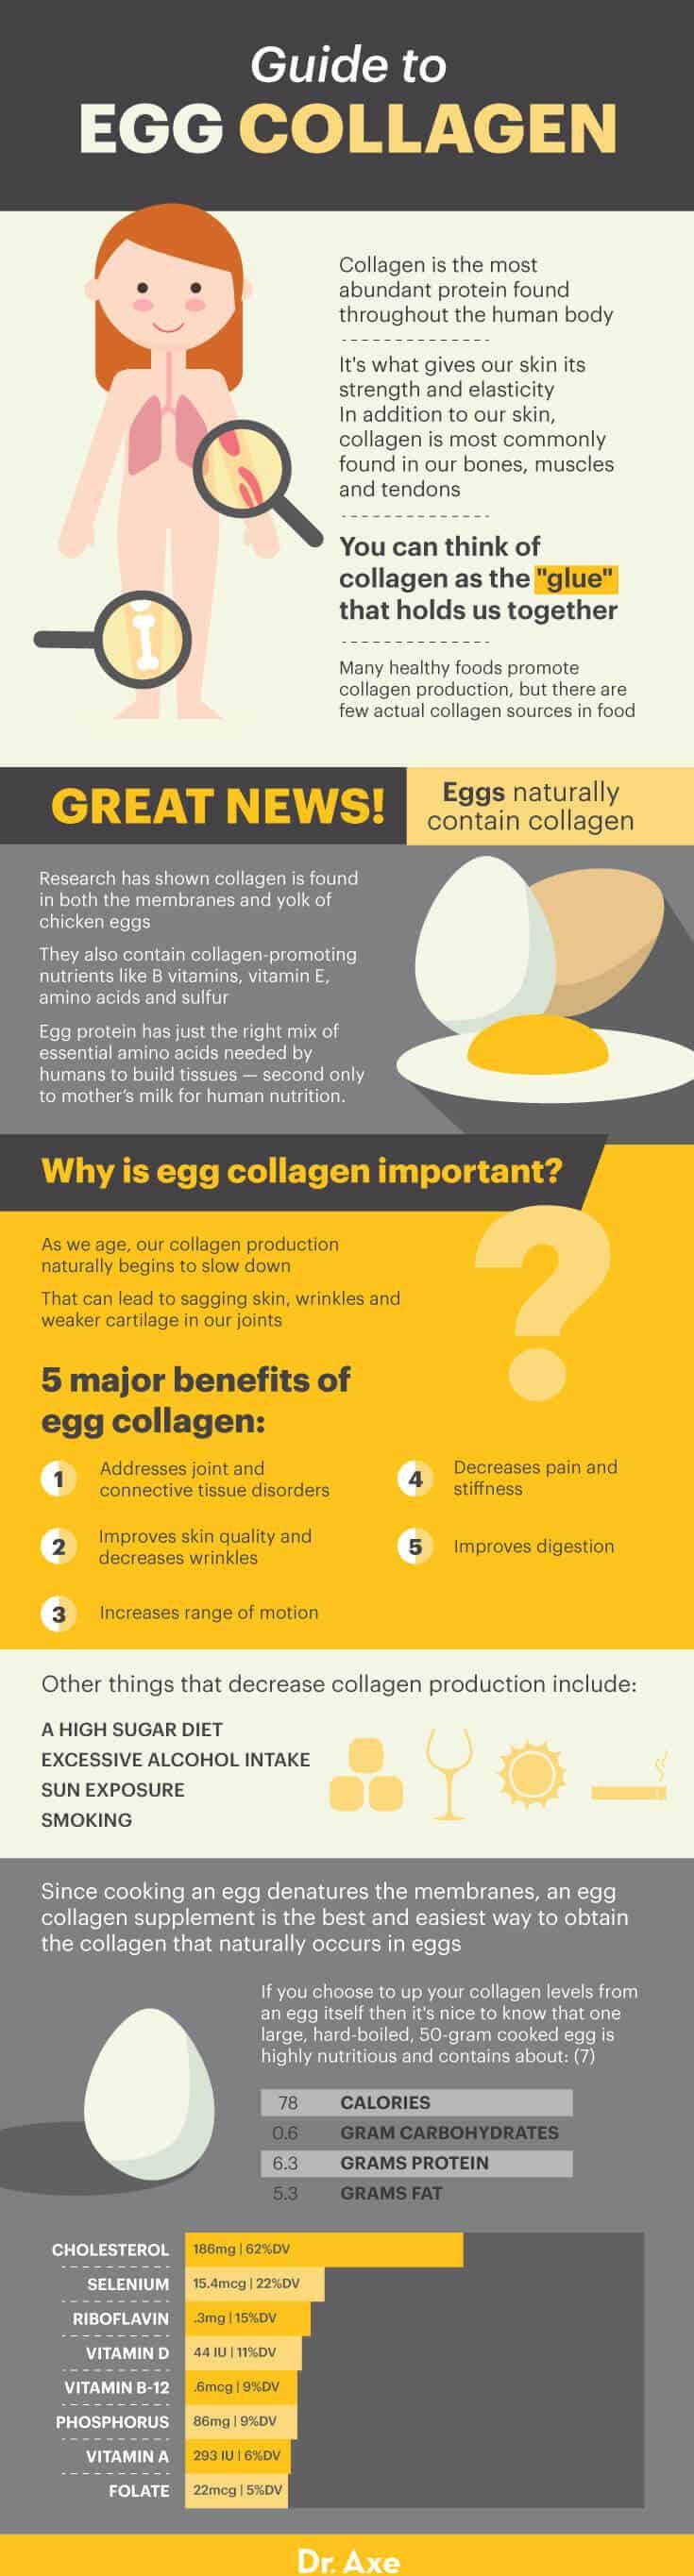 Guide to egg collagen - Dr. Axe